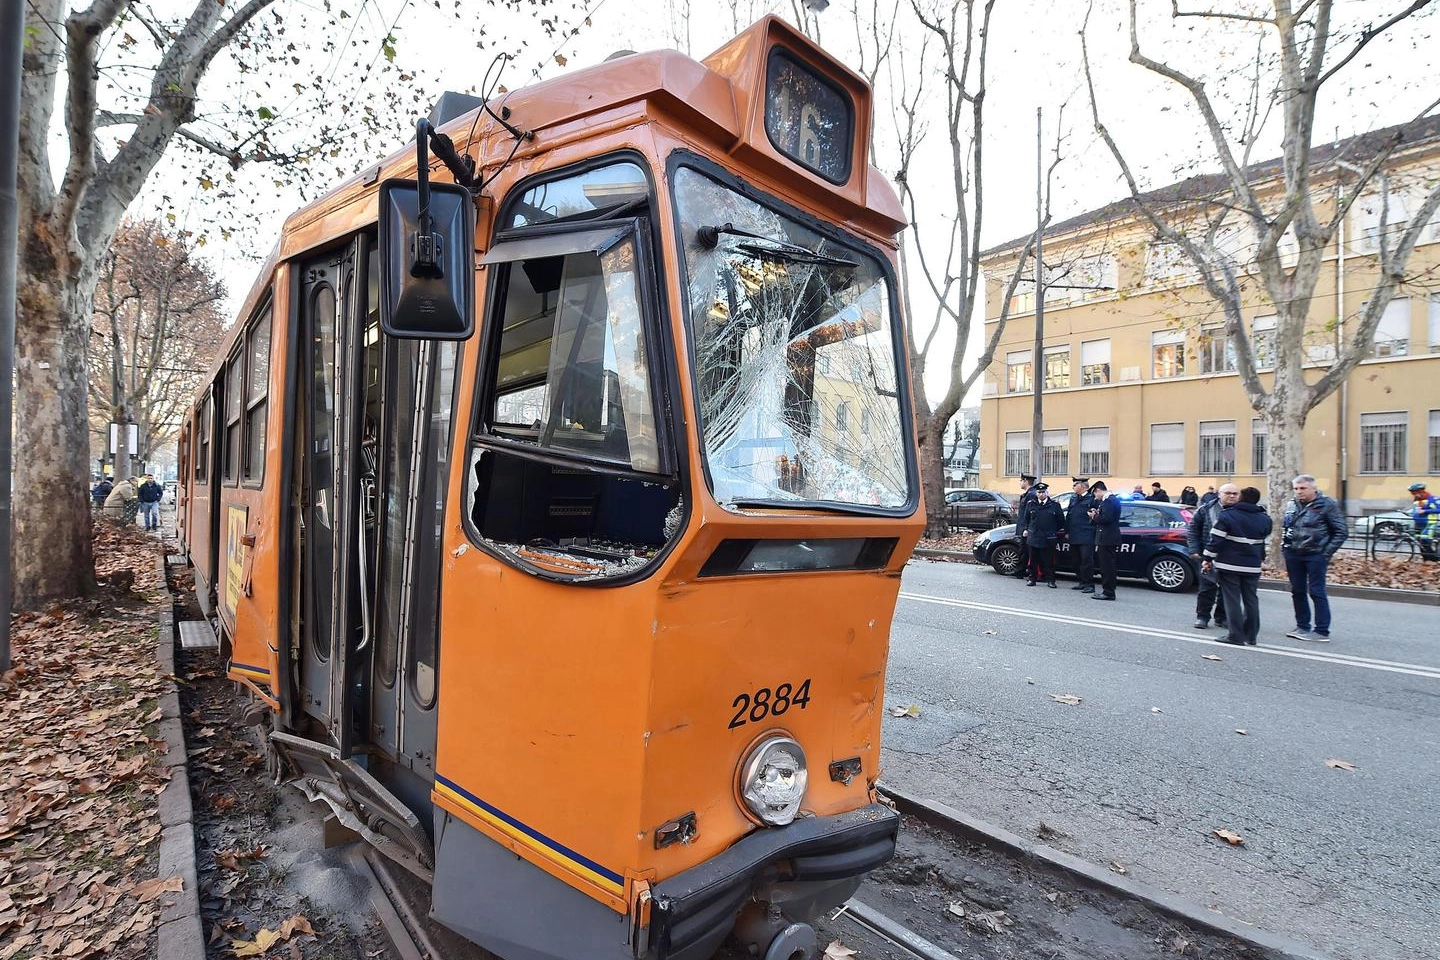 Scontro fra due tram a Torino: 14 feriti (Ansa)